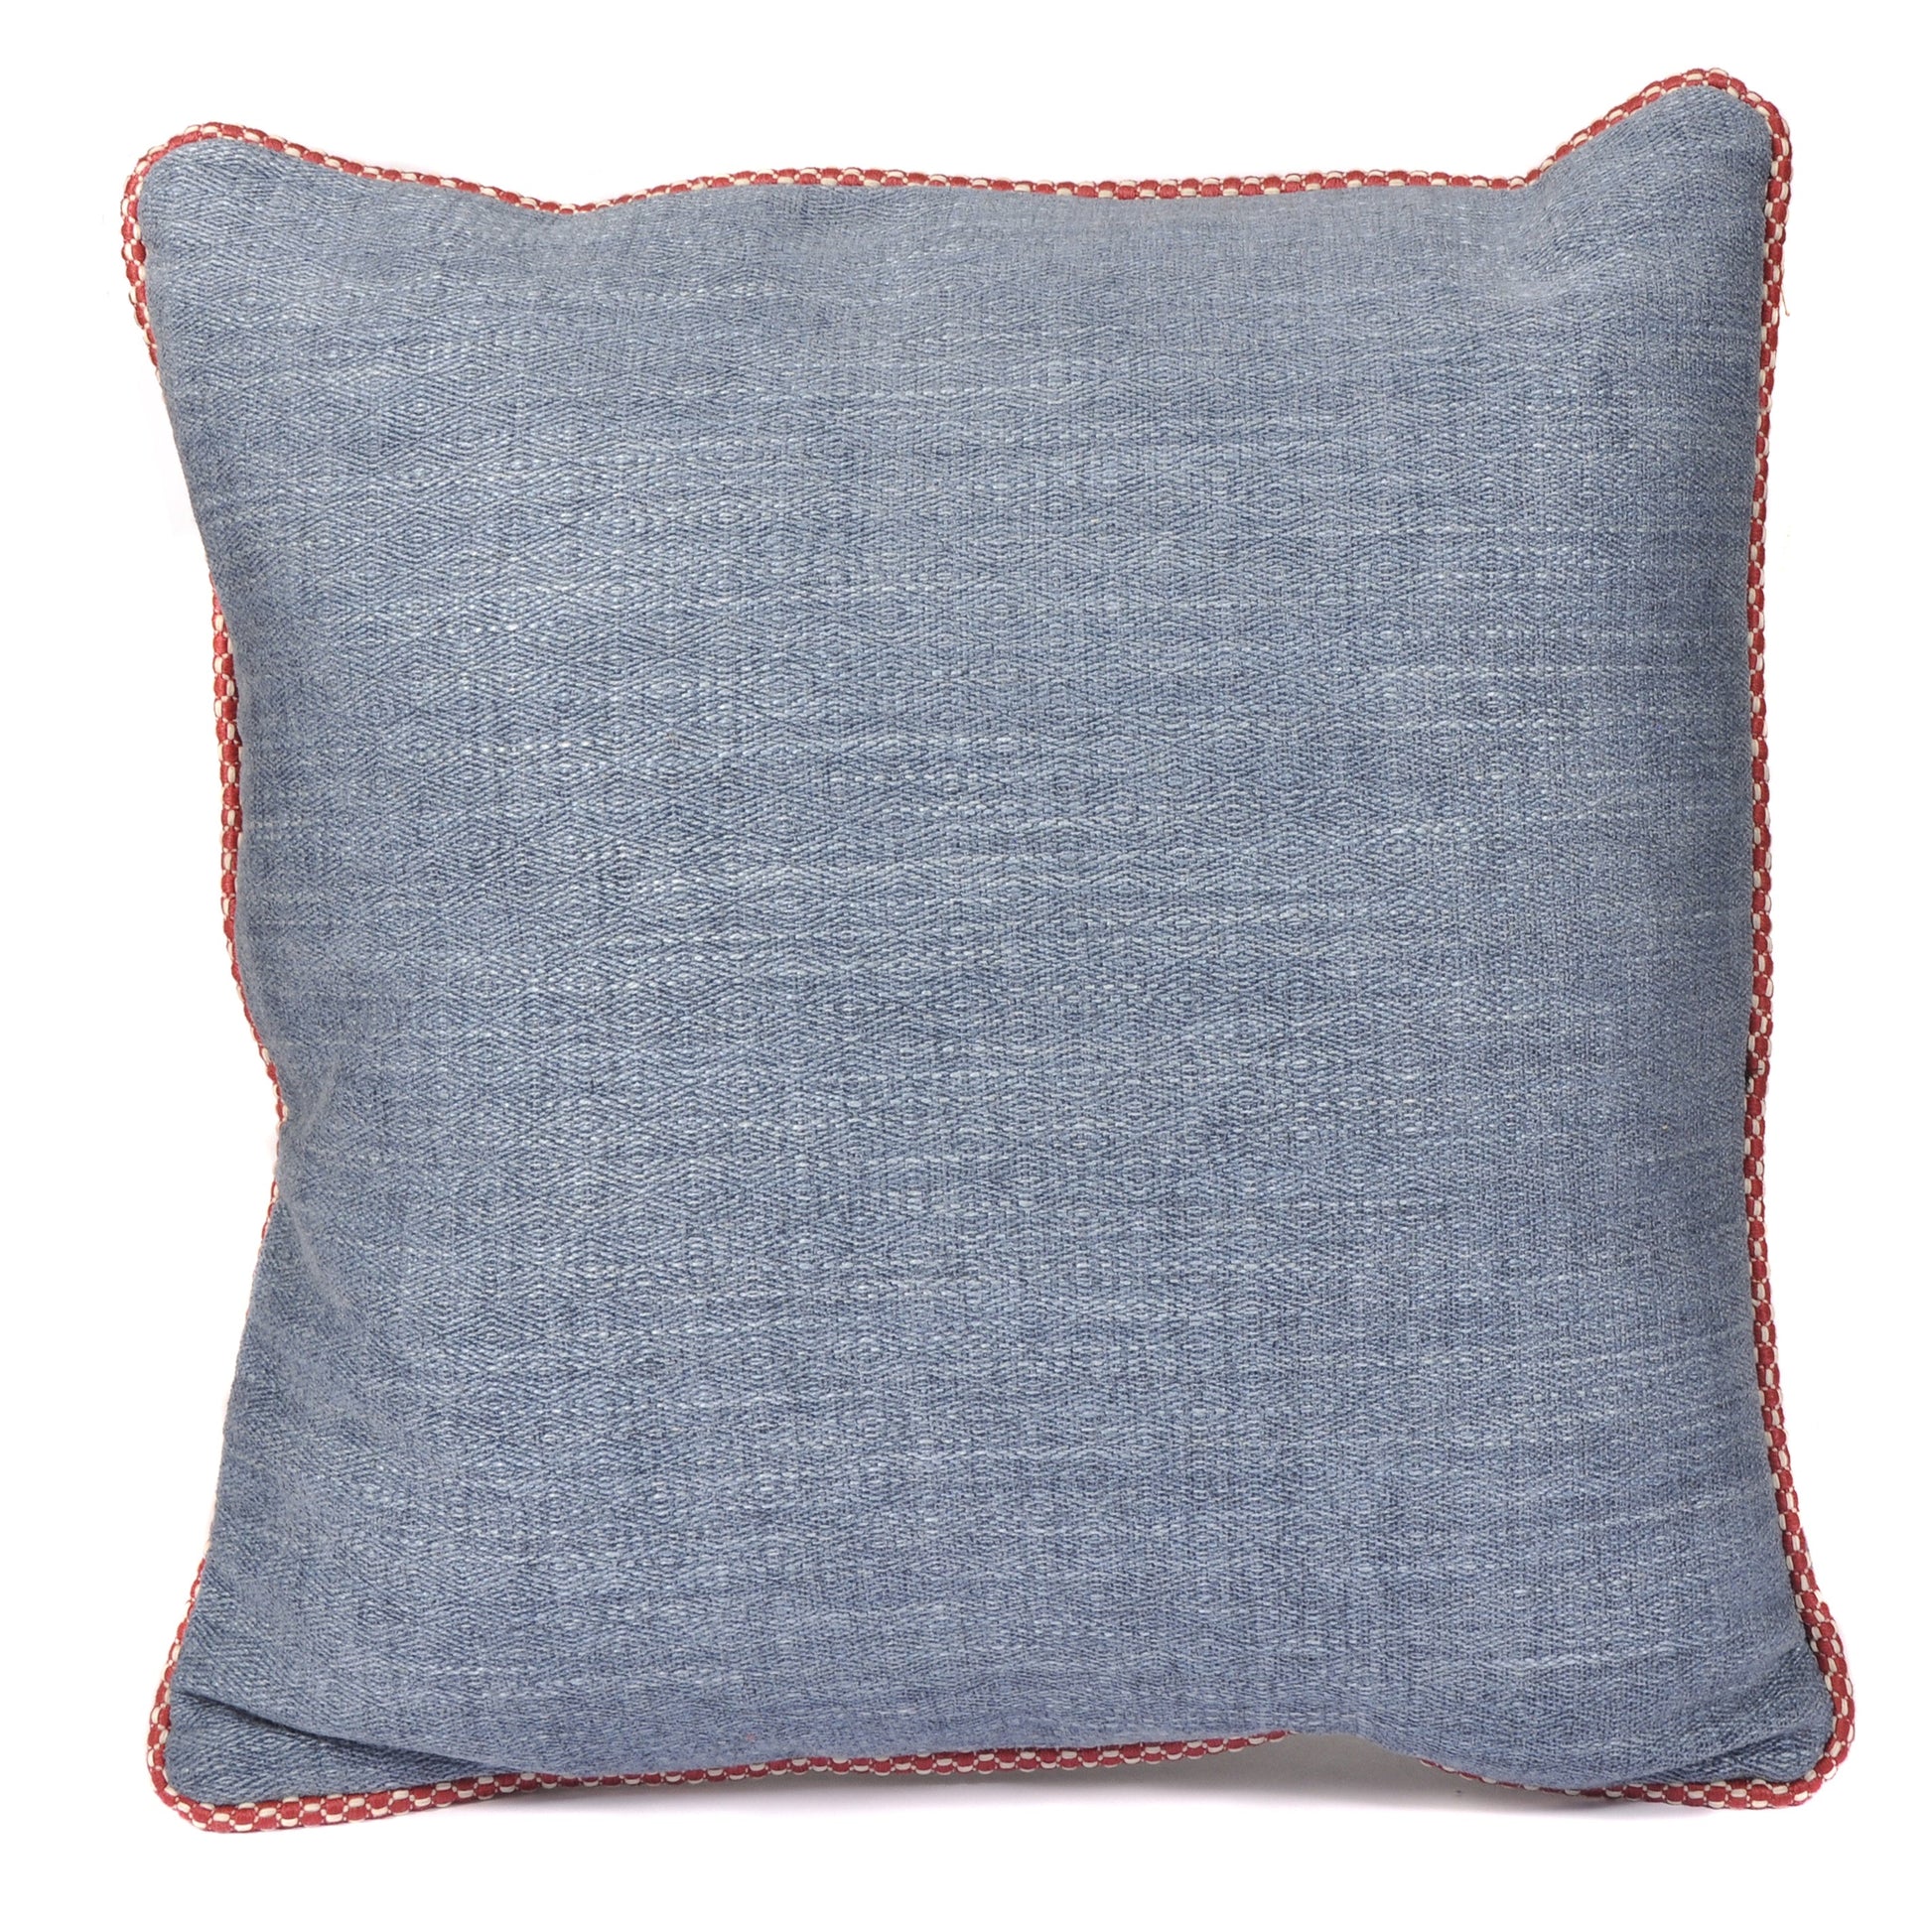 Indigo Weave Cushion with Cerise Trim Joanna Wood Shop